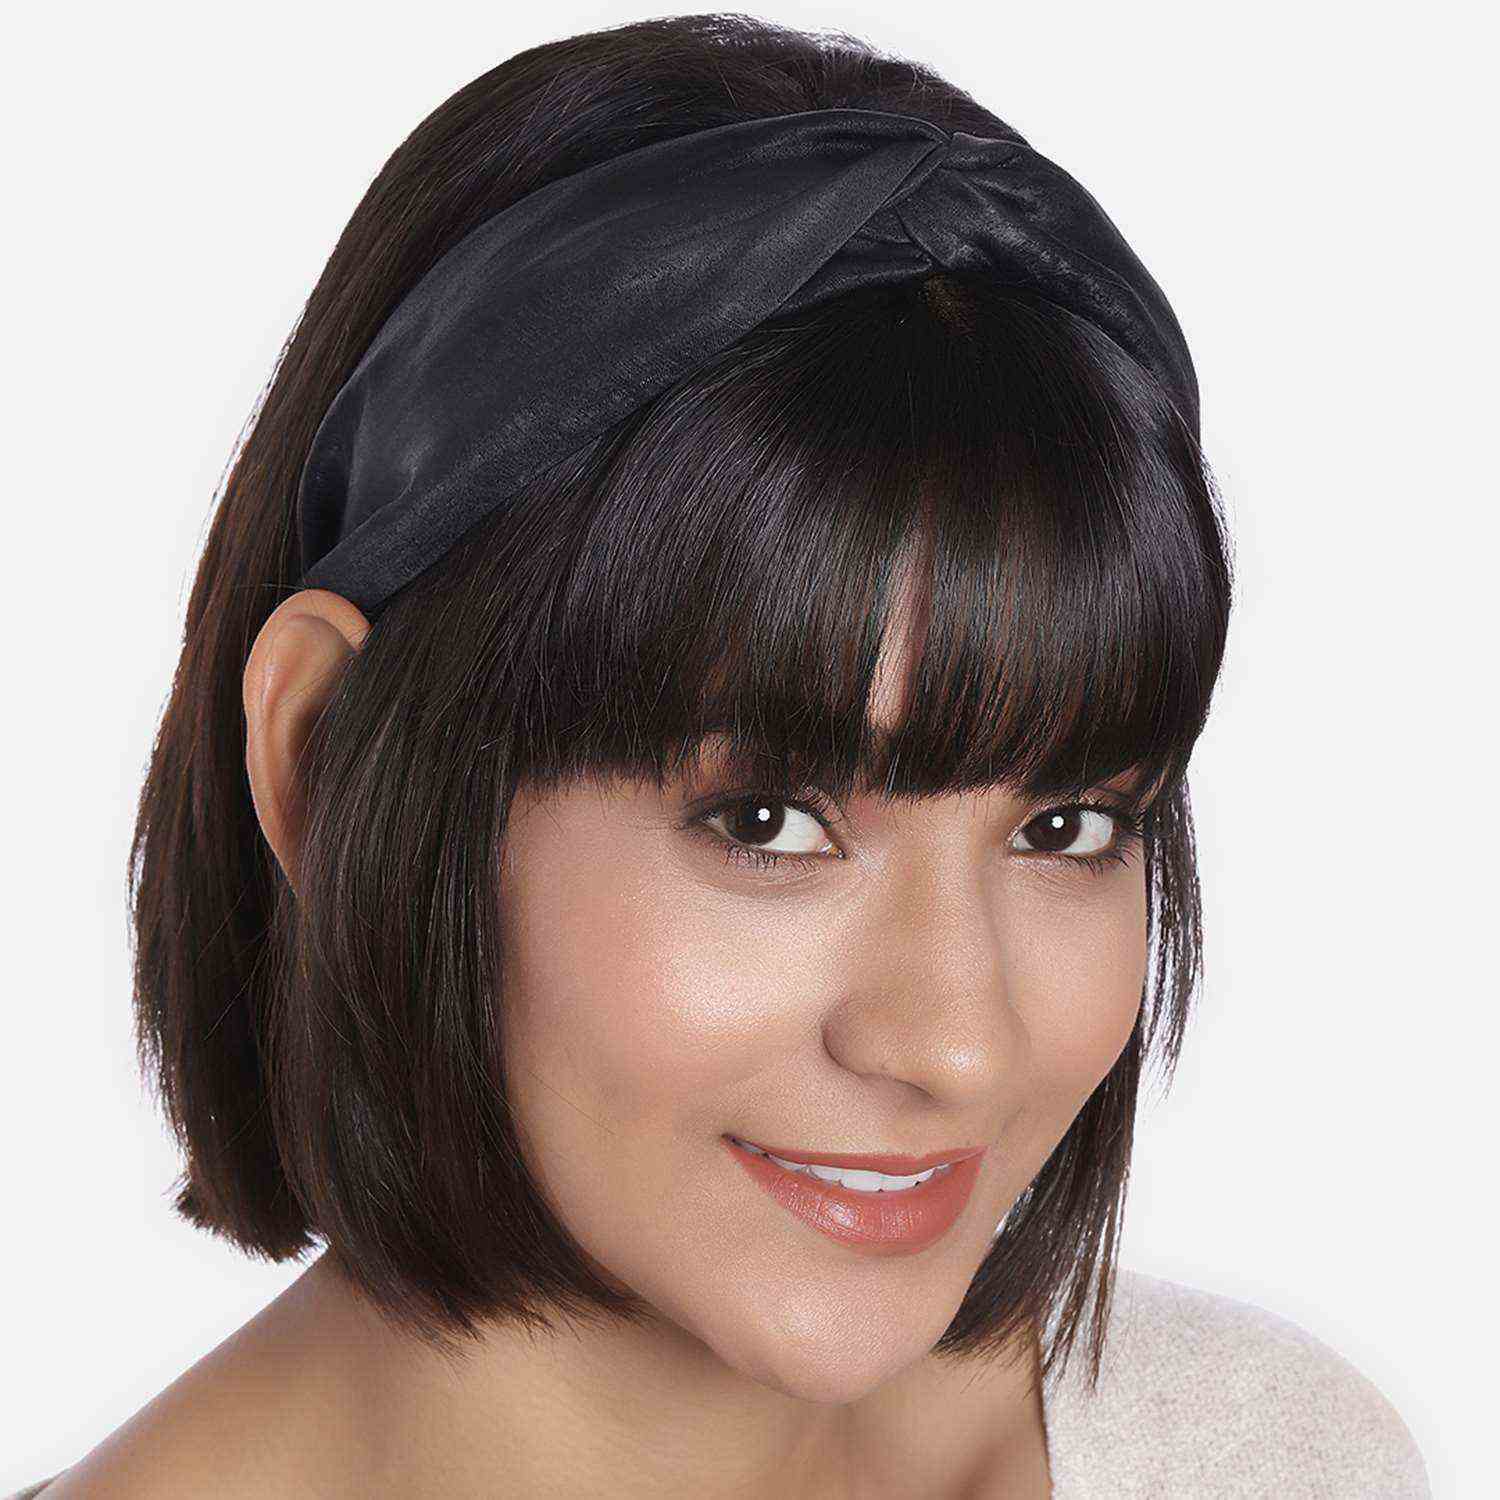 Veronica in Black Satin Headband